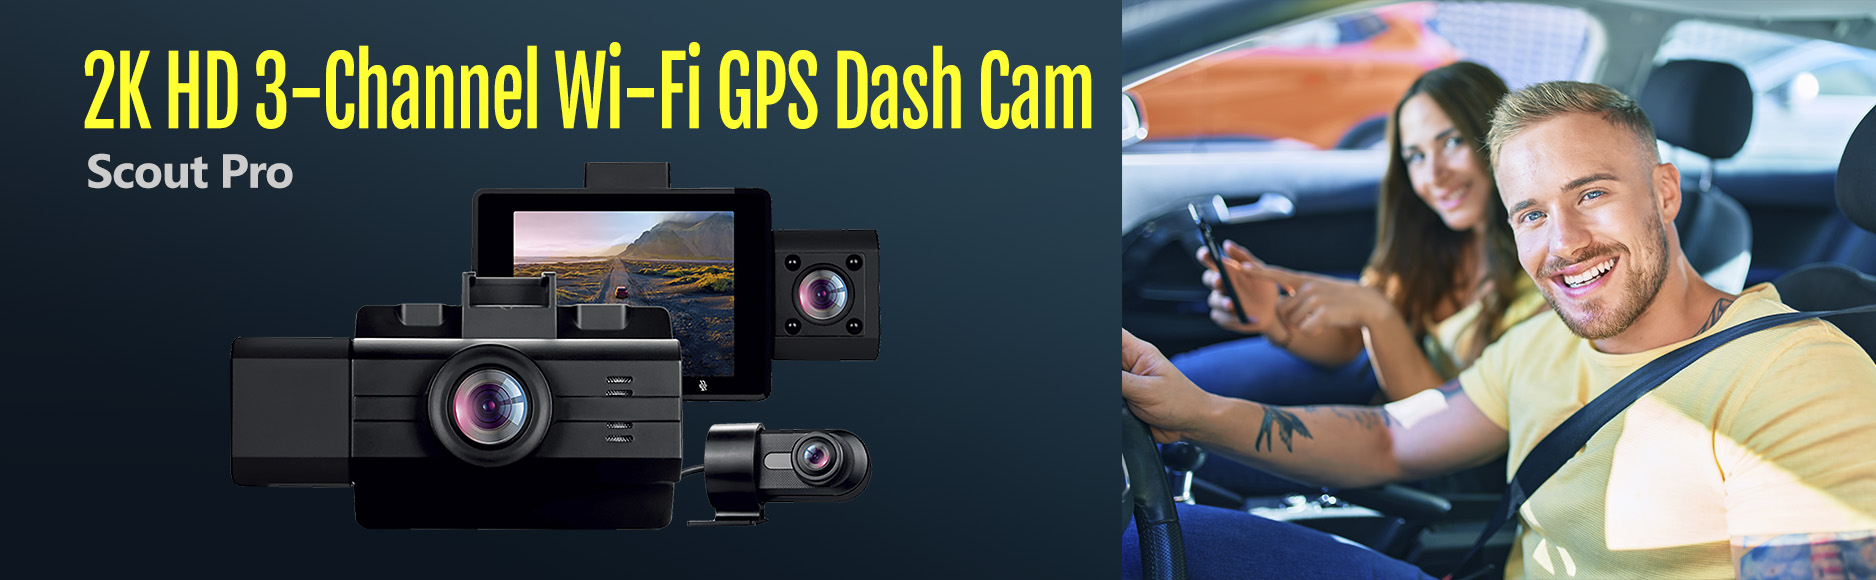 ScoutPro - 3 Channel 2K Wifi GPS Dash Cam